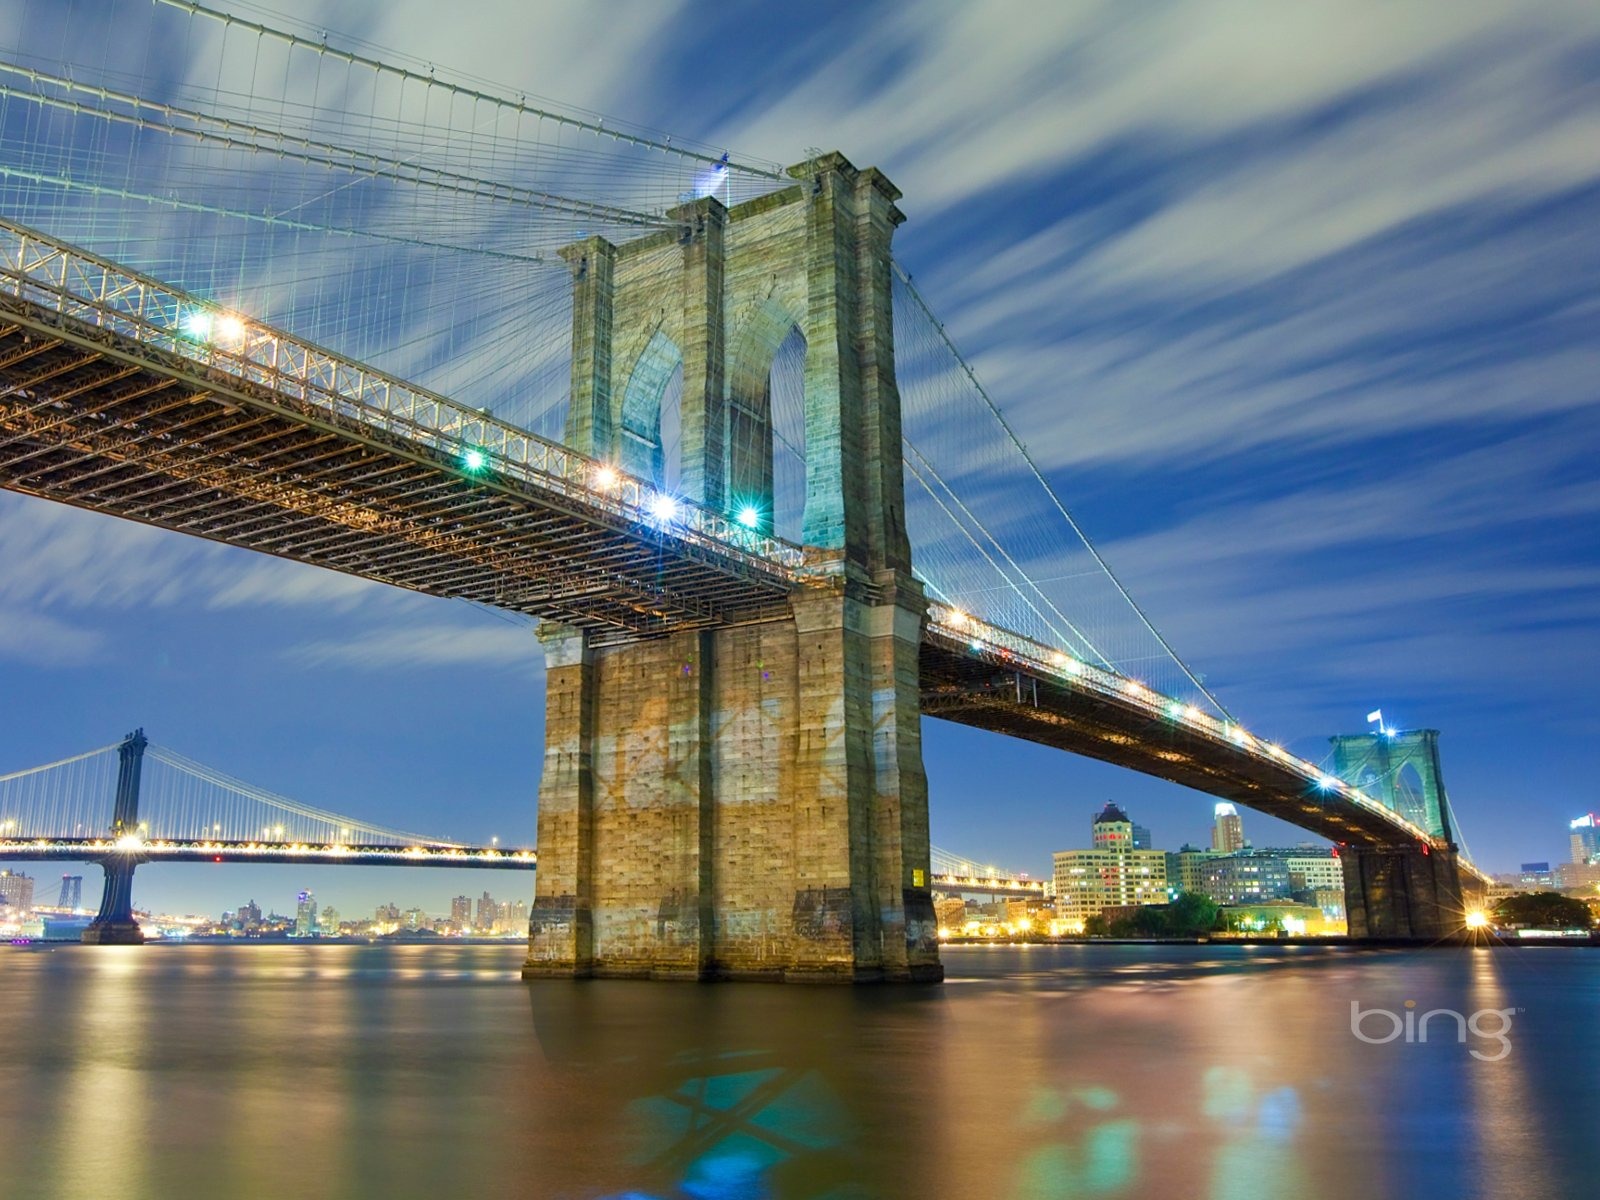 New York City Brooklyn Bridge Wallpaper